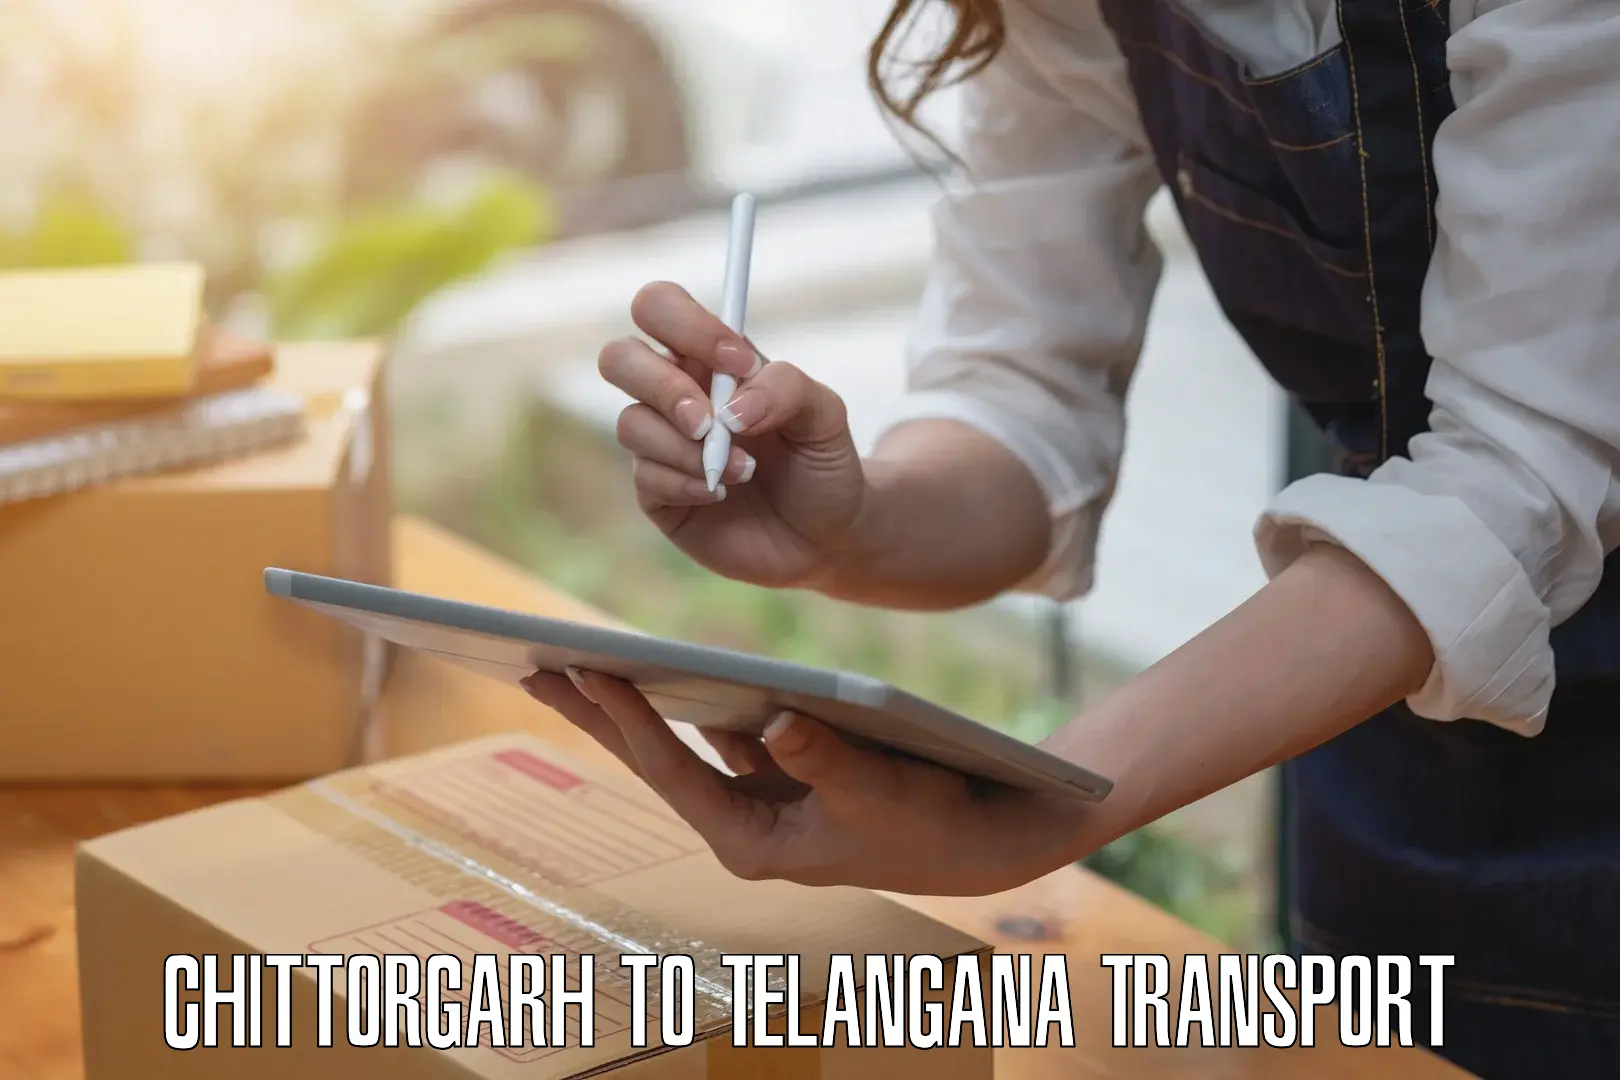 Transport in sharing Chittorgarh to Balanagar